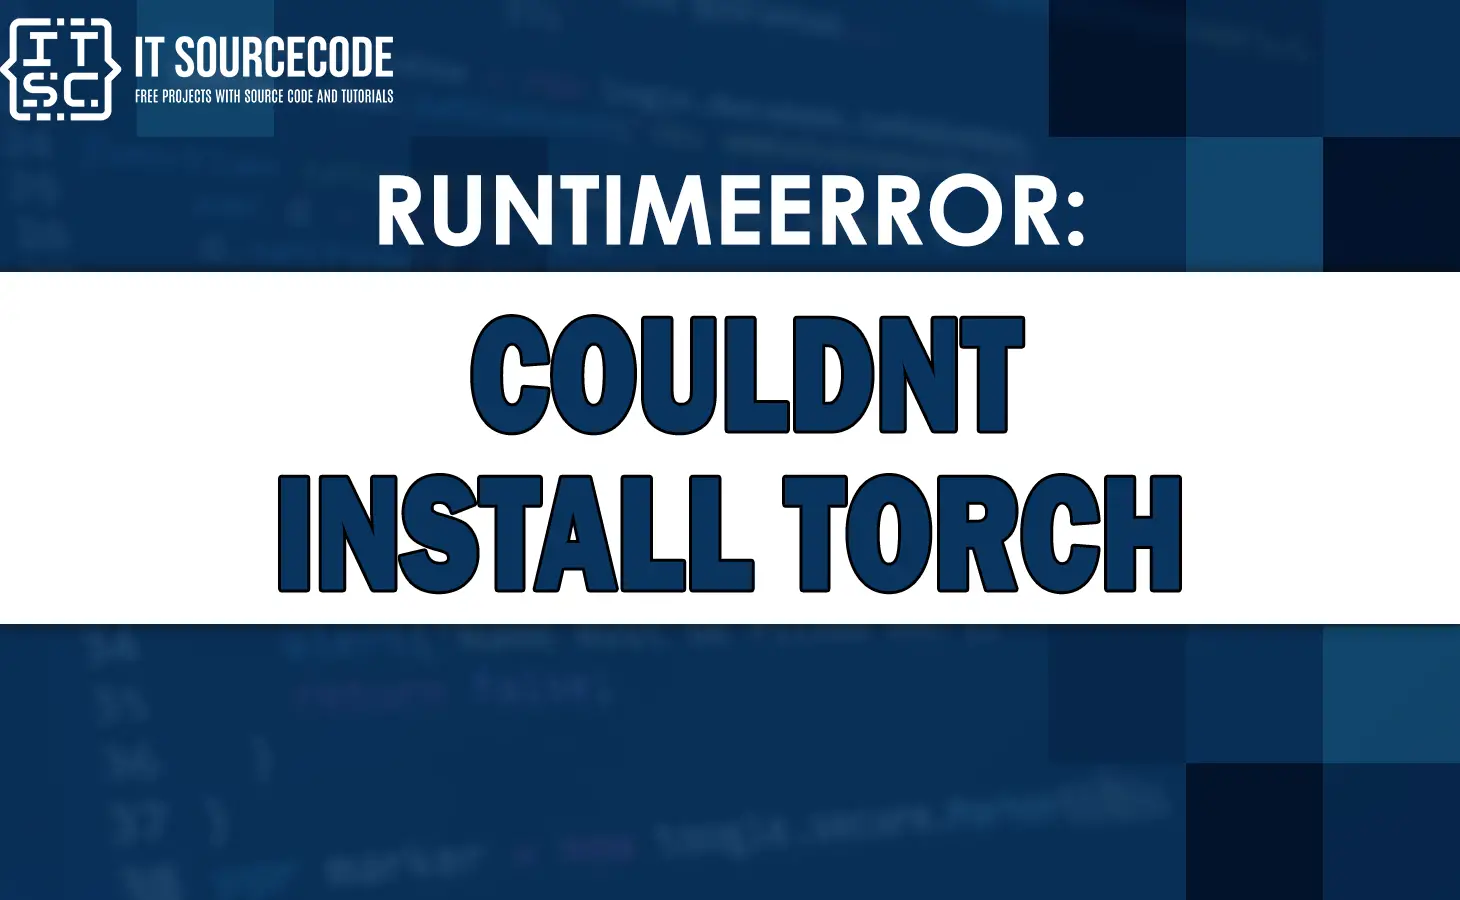 Runtimeerror couldnt install torch